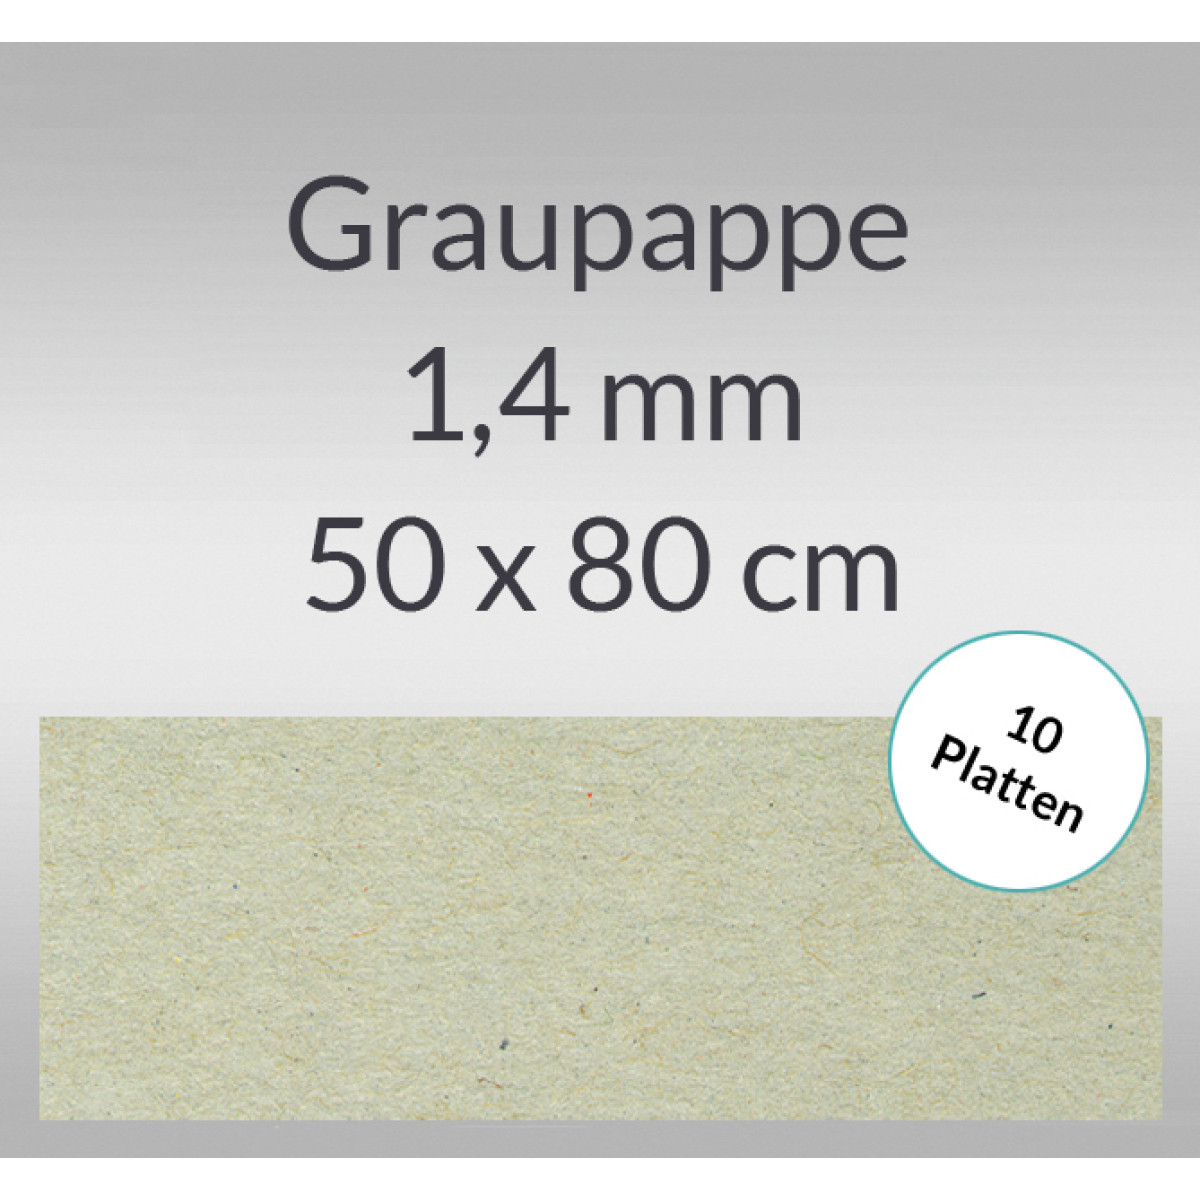 Graupappe 50 x 80 cm - 1,4 mm